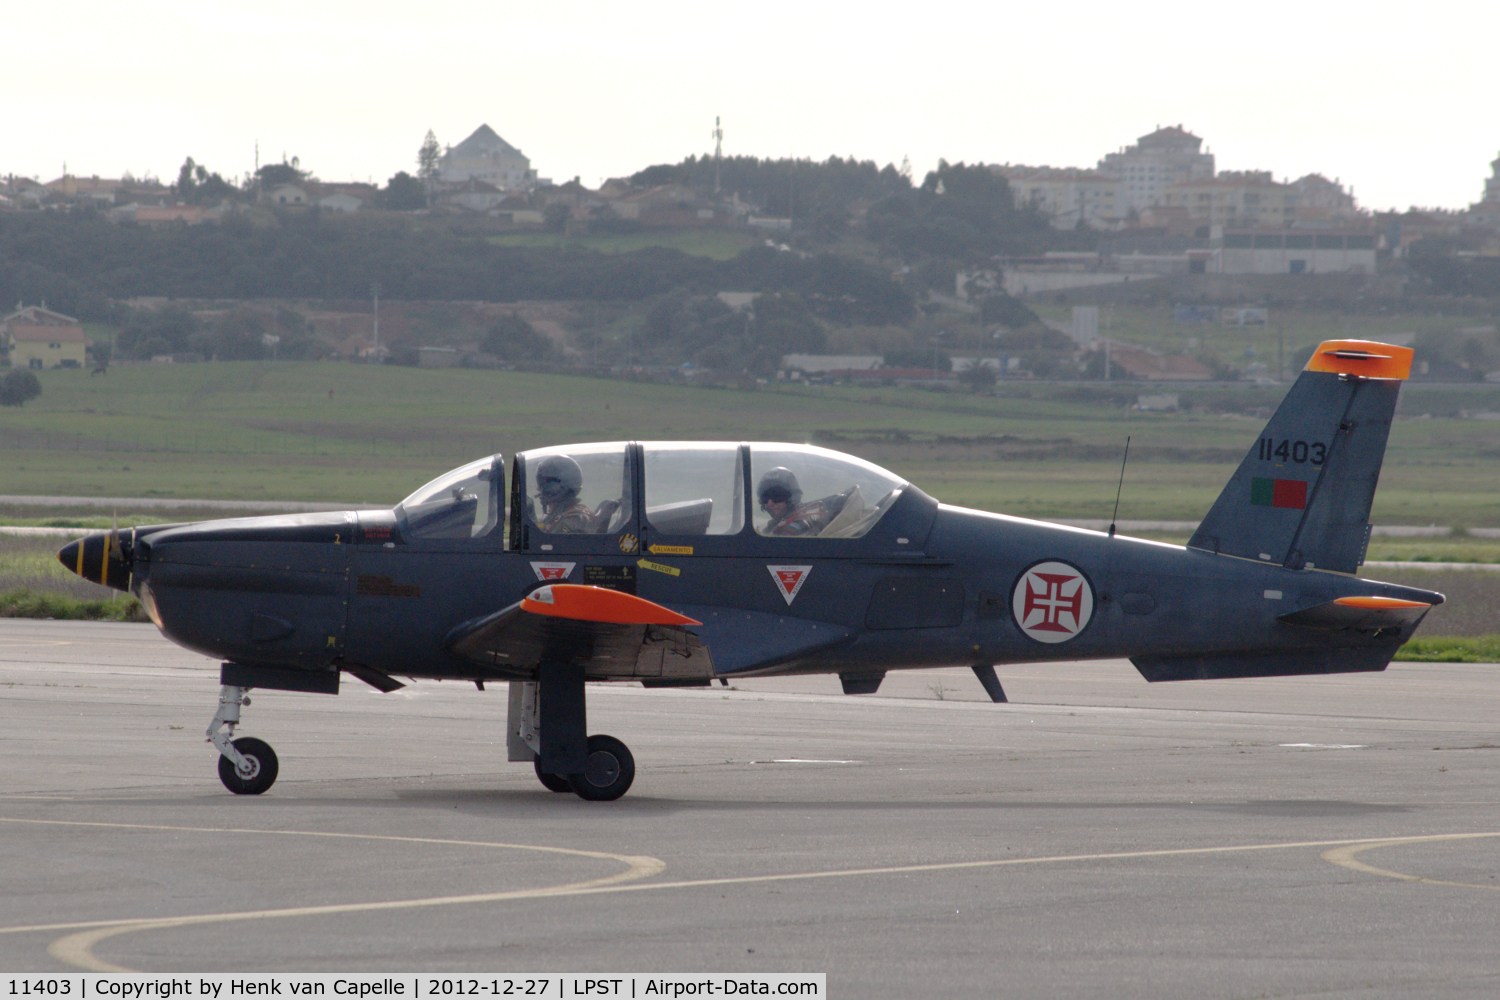 11403, Socata TB-30 Epsilon C/N 157, An Epsilon trainer of the Portuguese Air Force taxying at Sintra air force base.